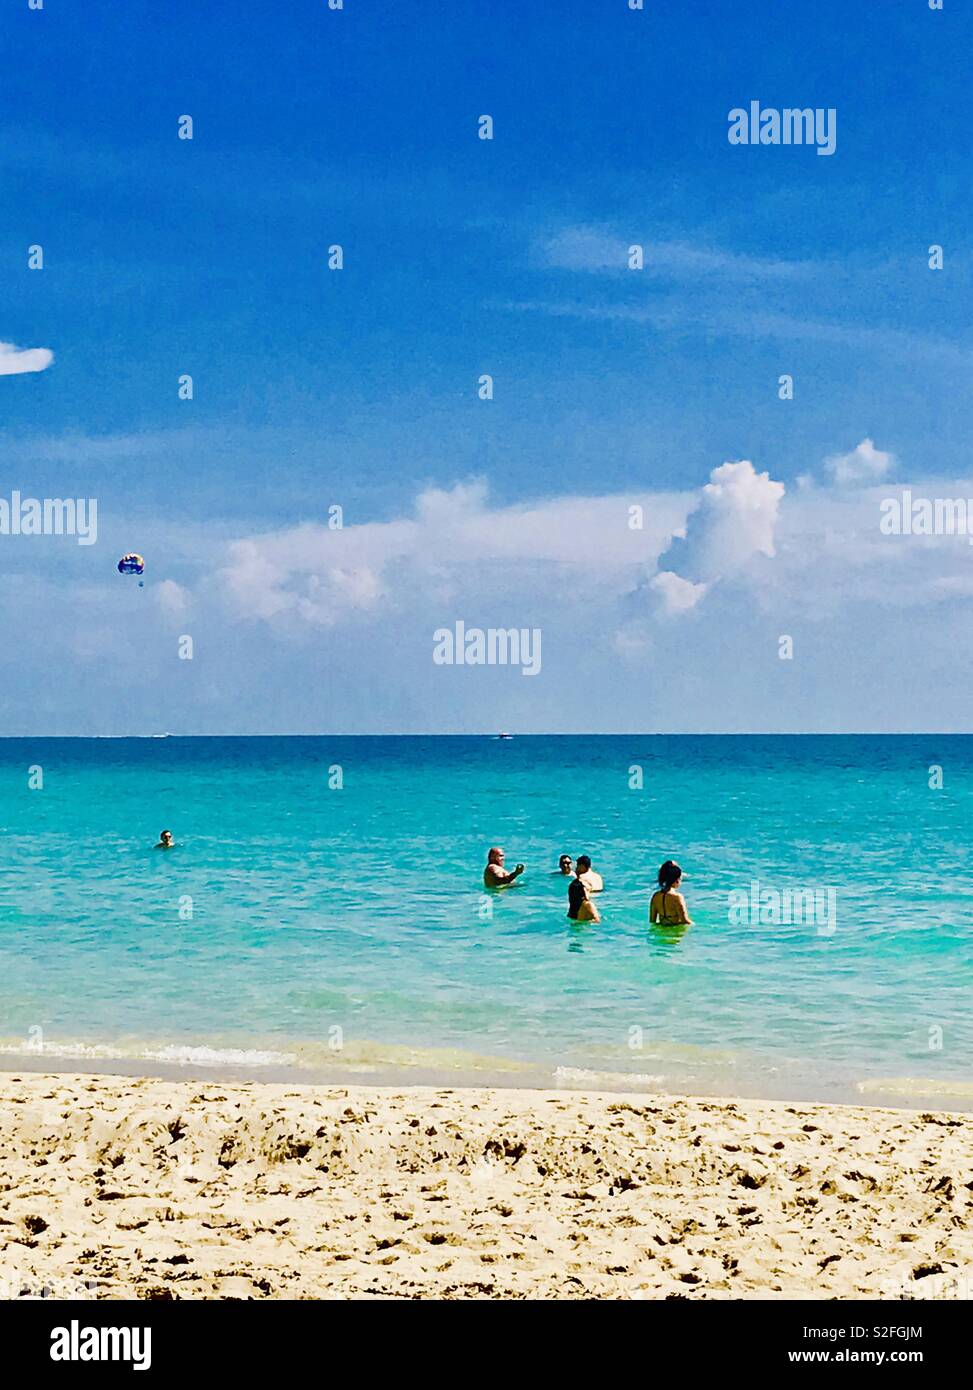 People having fun in the sea at South Beach Miami Florida Stock Photo